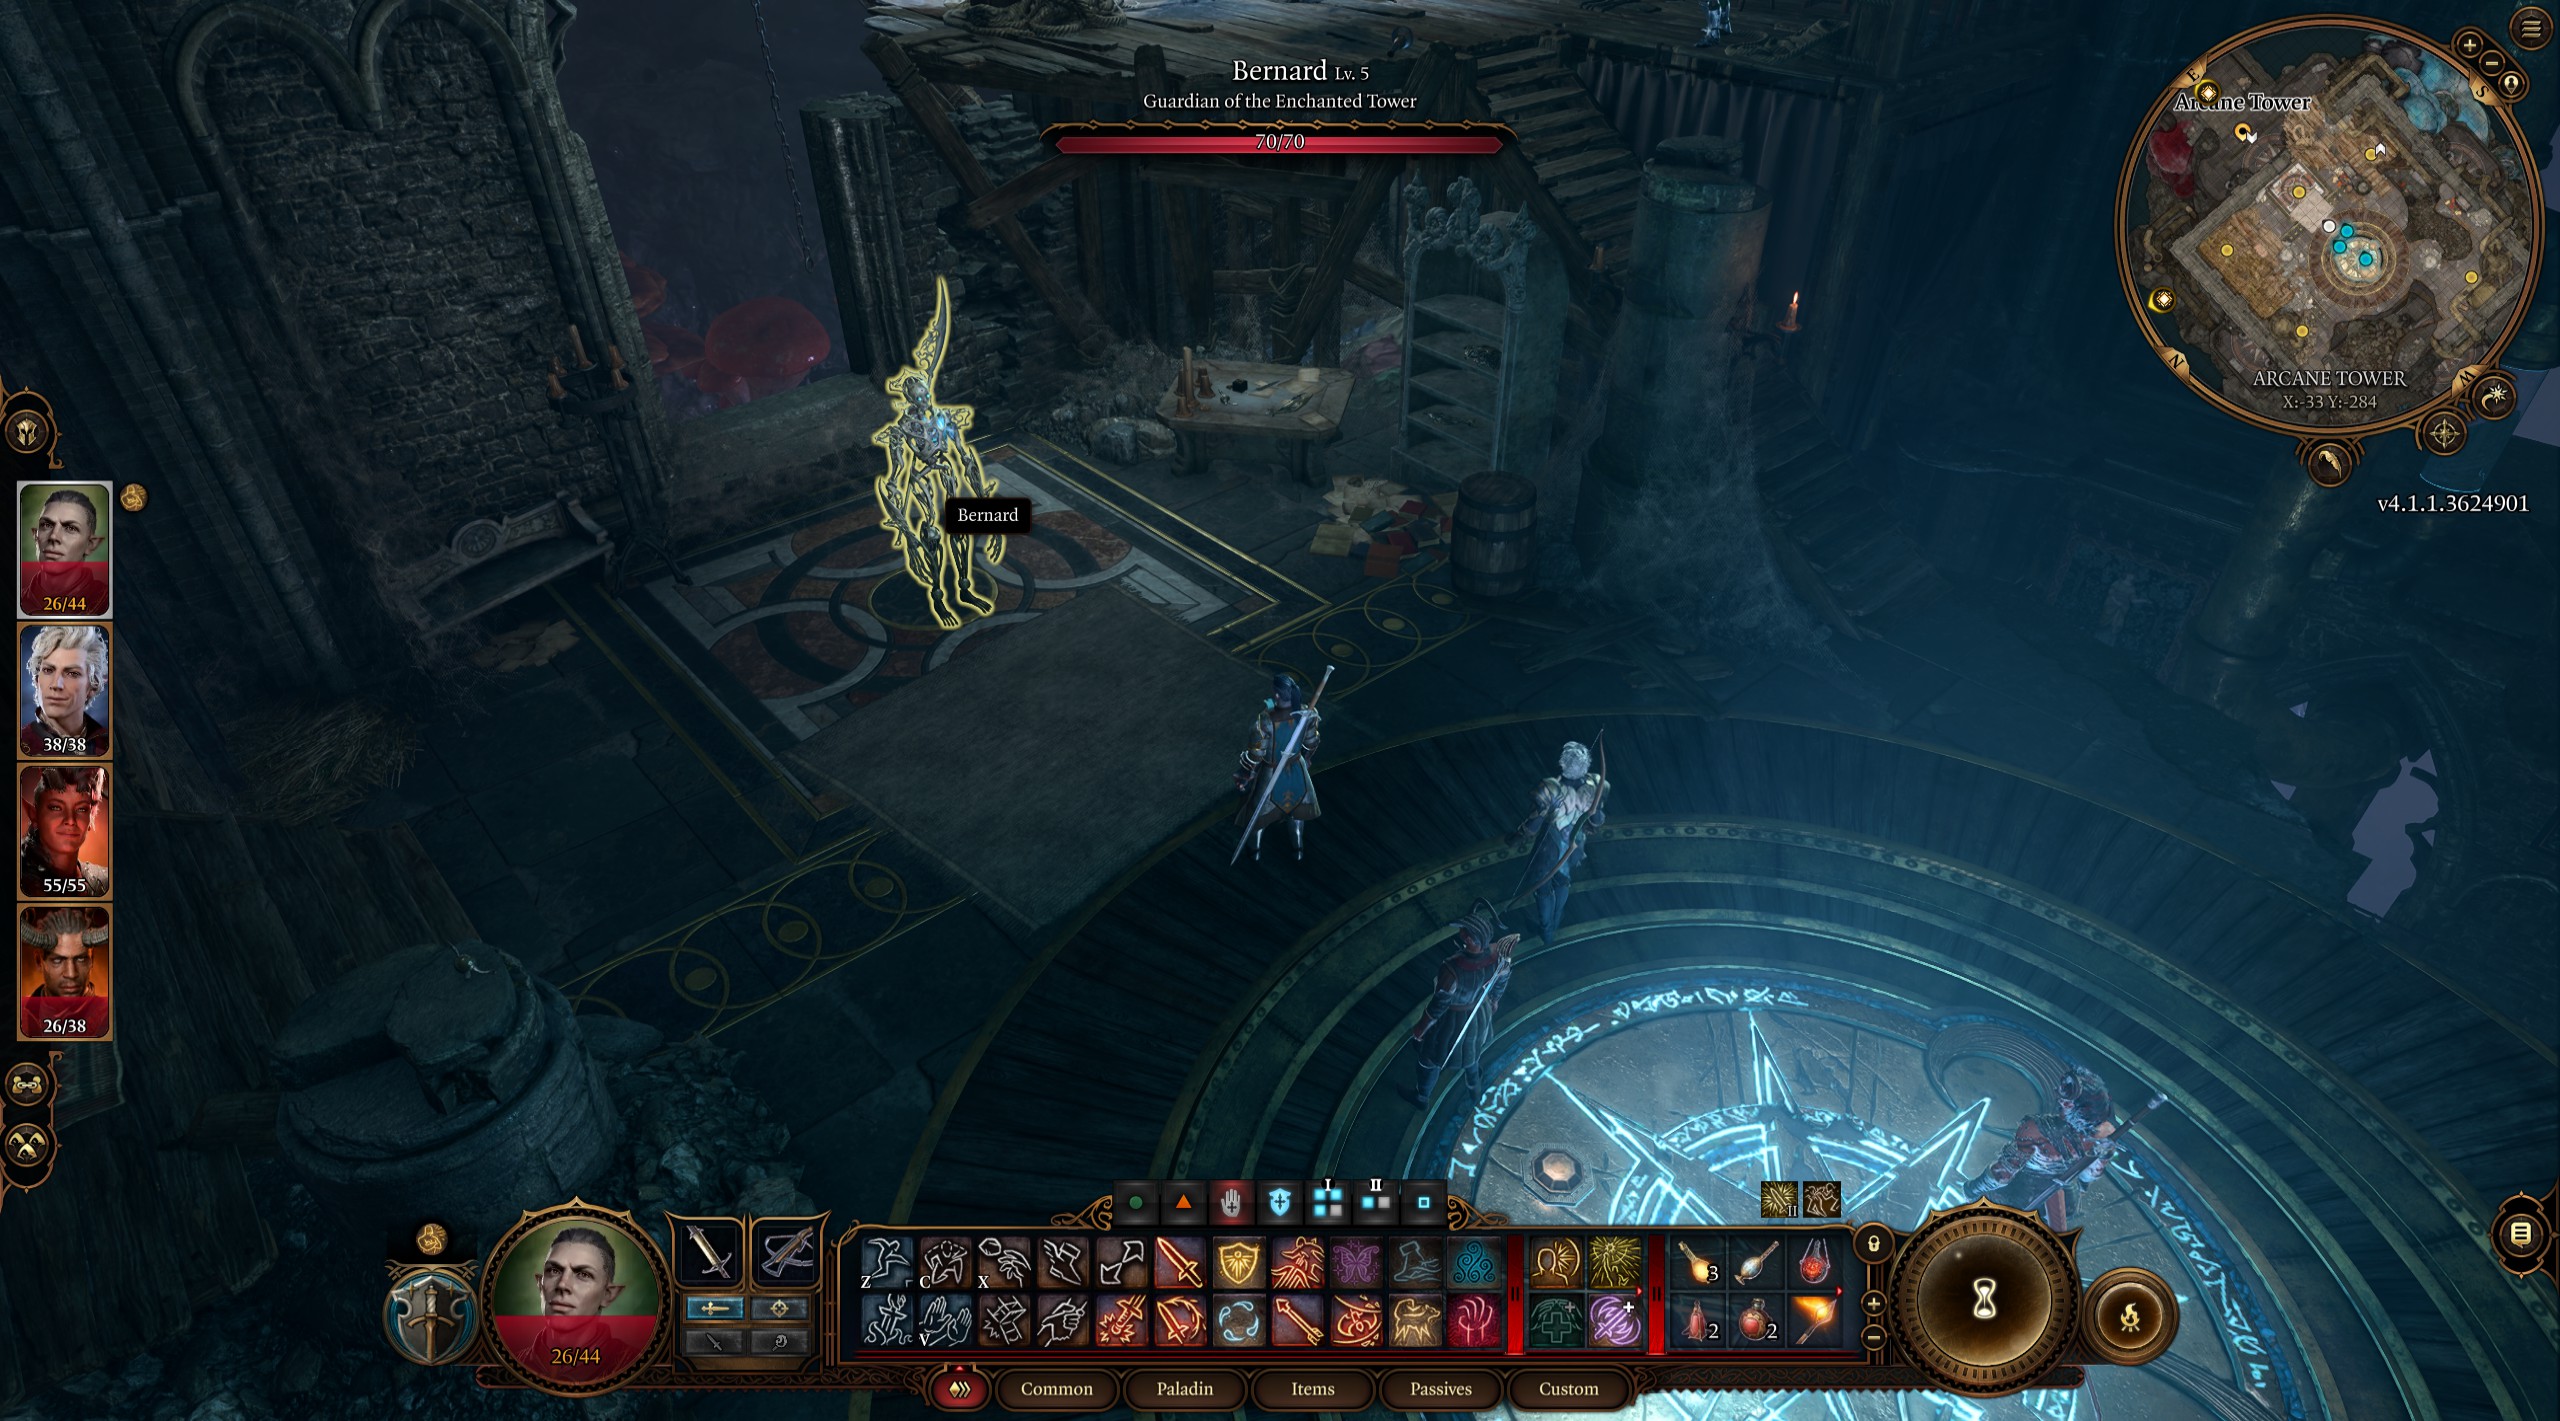 Parte superior de Baldur's Gate 3 Arcane Tower con Bernard, el robot mayordomo Baldur's Gate 3